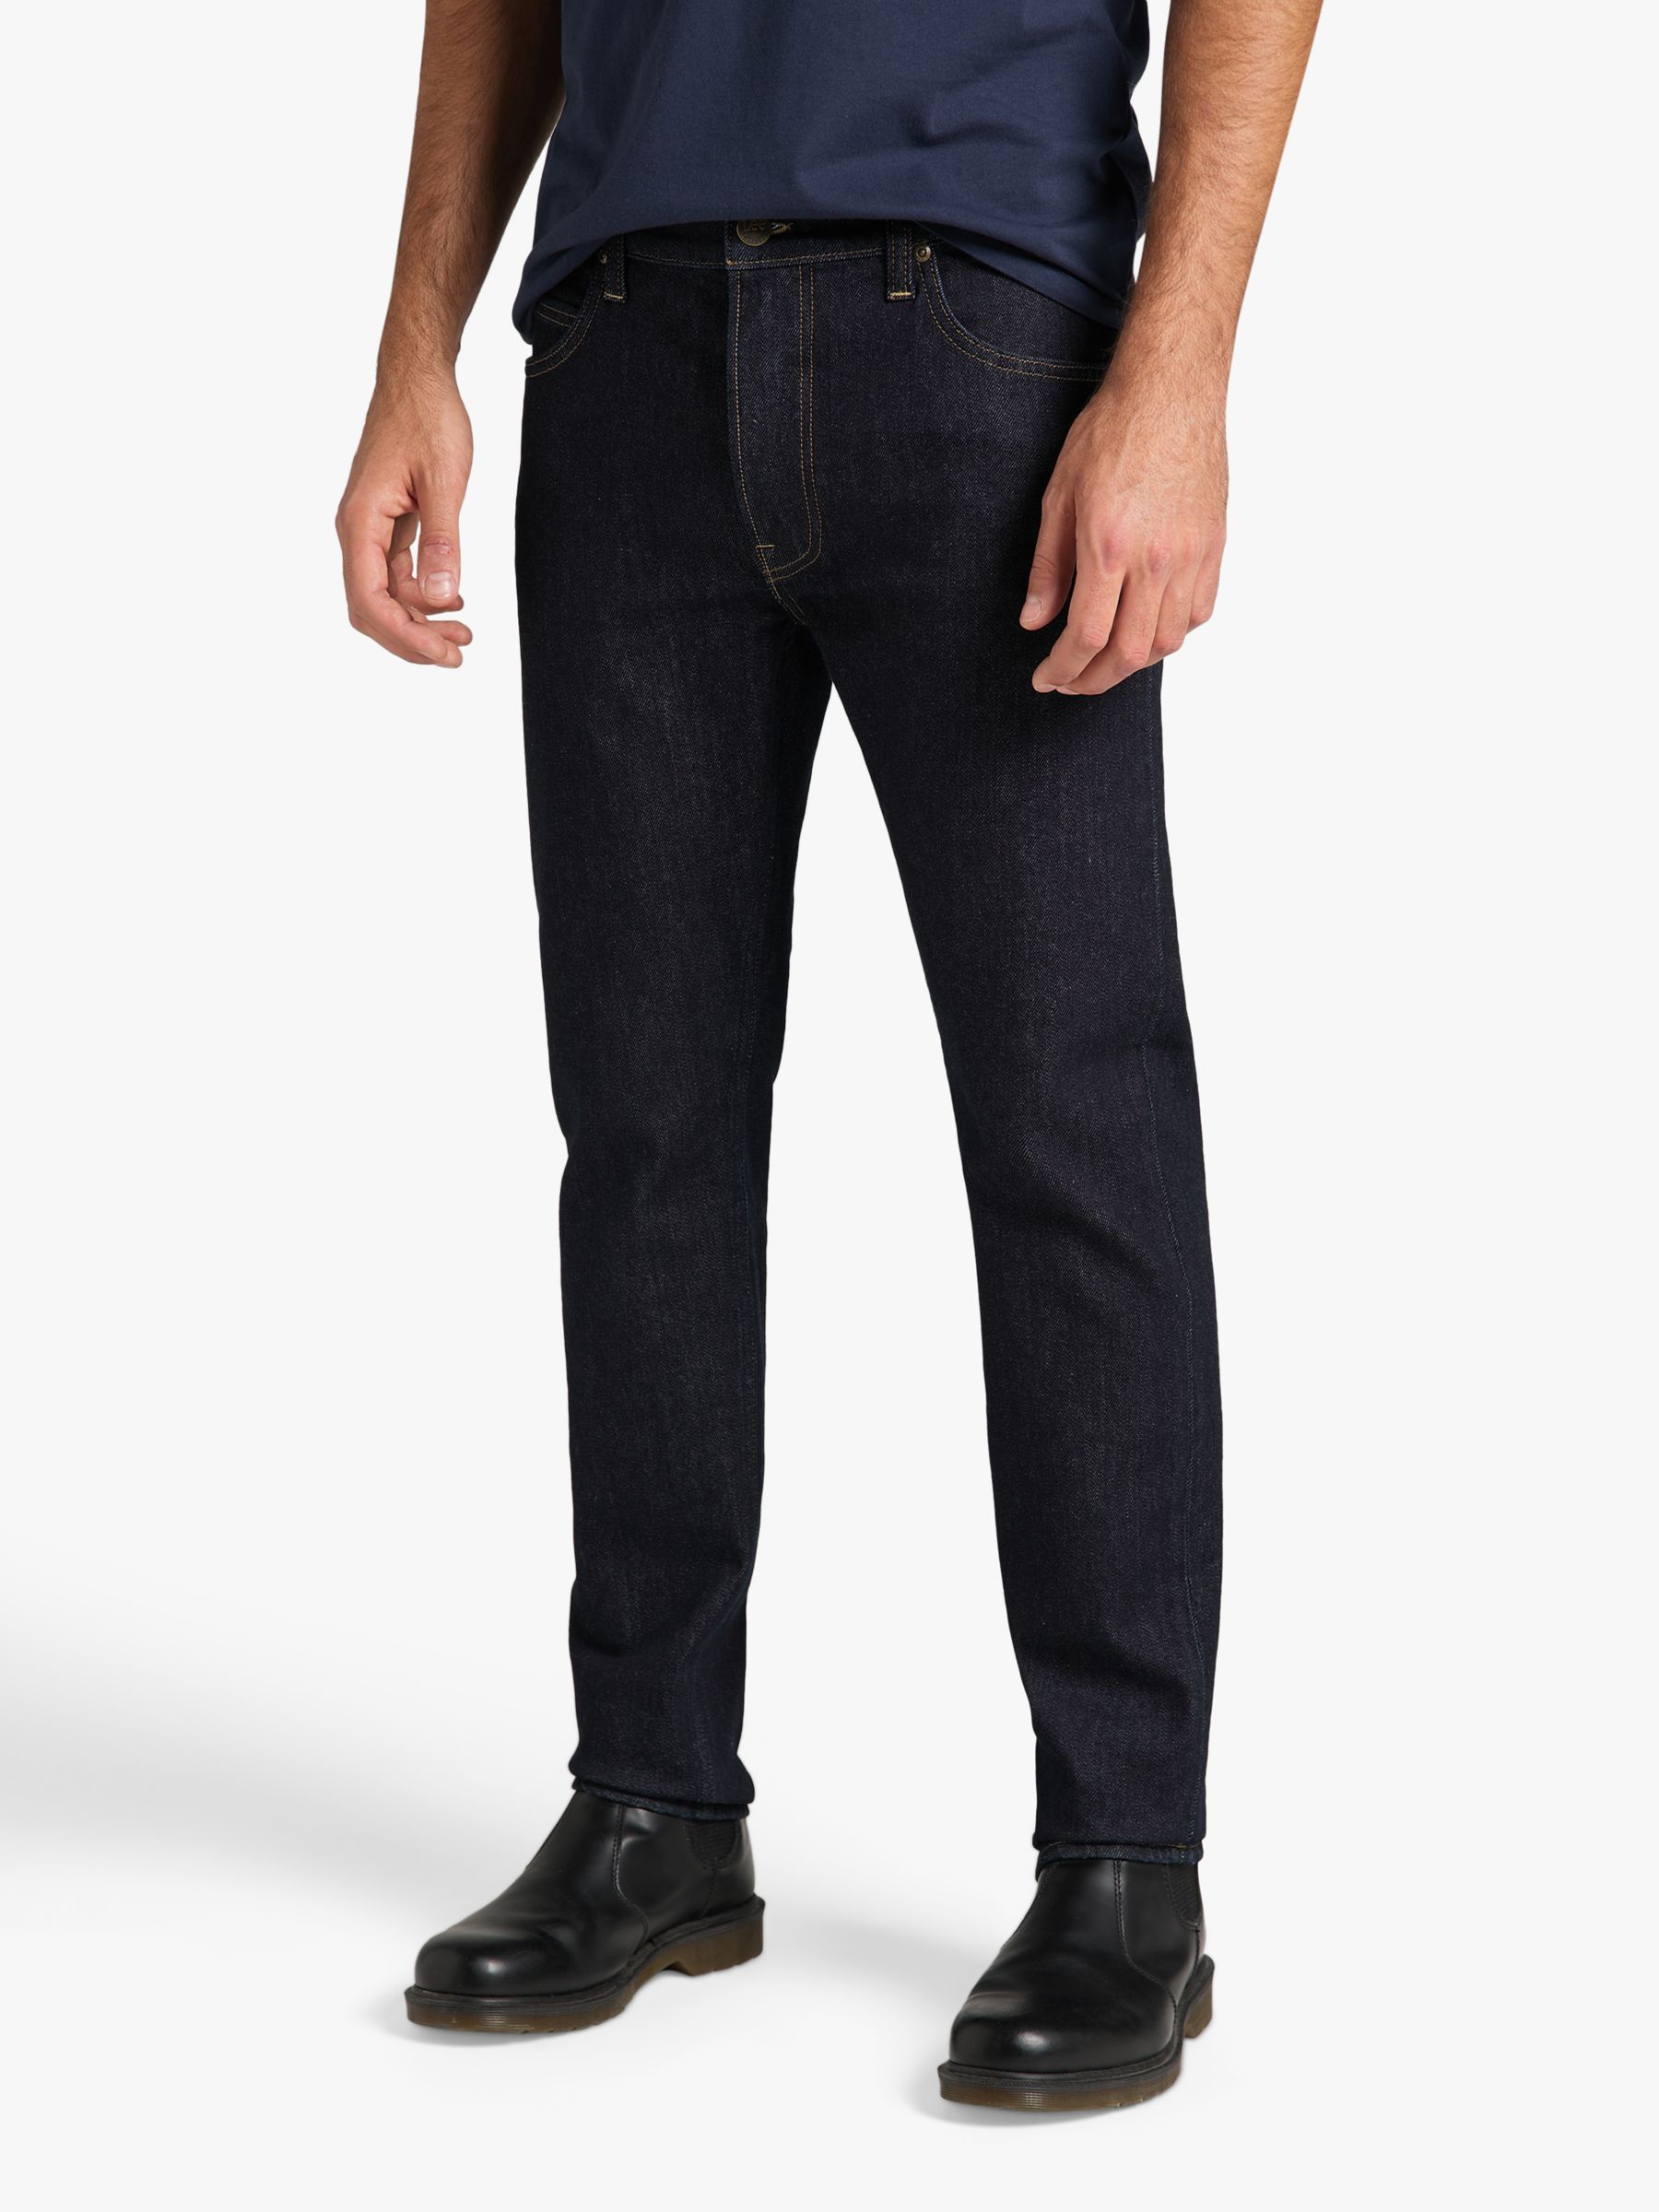 Lee Rider Slim Fit Denim Jeans, Blue, 30S